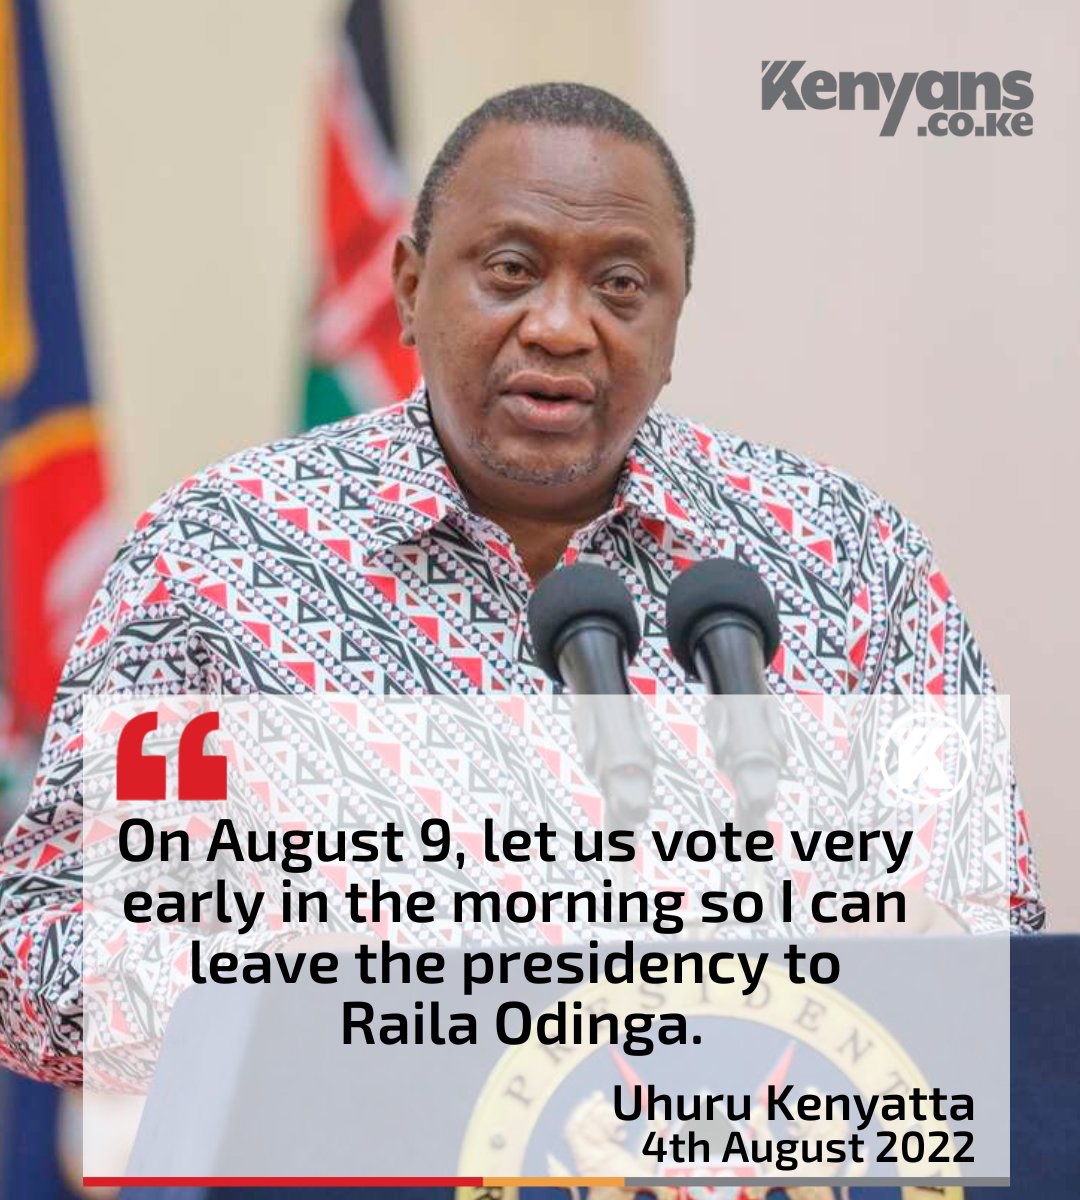 President Uhuru Kenyatta tells Kenyans that he wants to leave presidency to Raila as in yesterday.